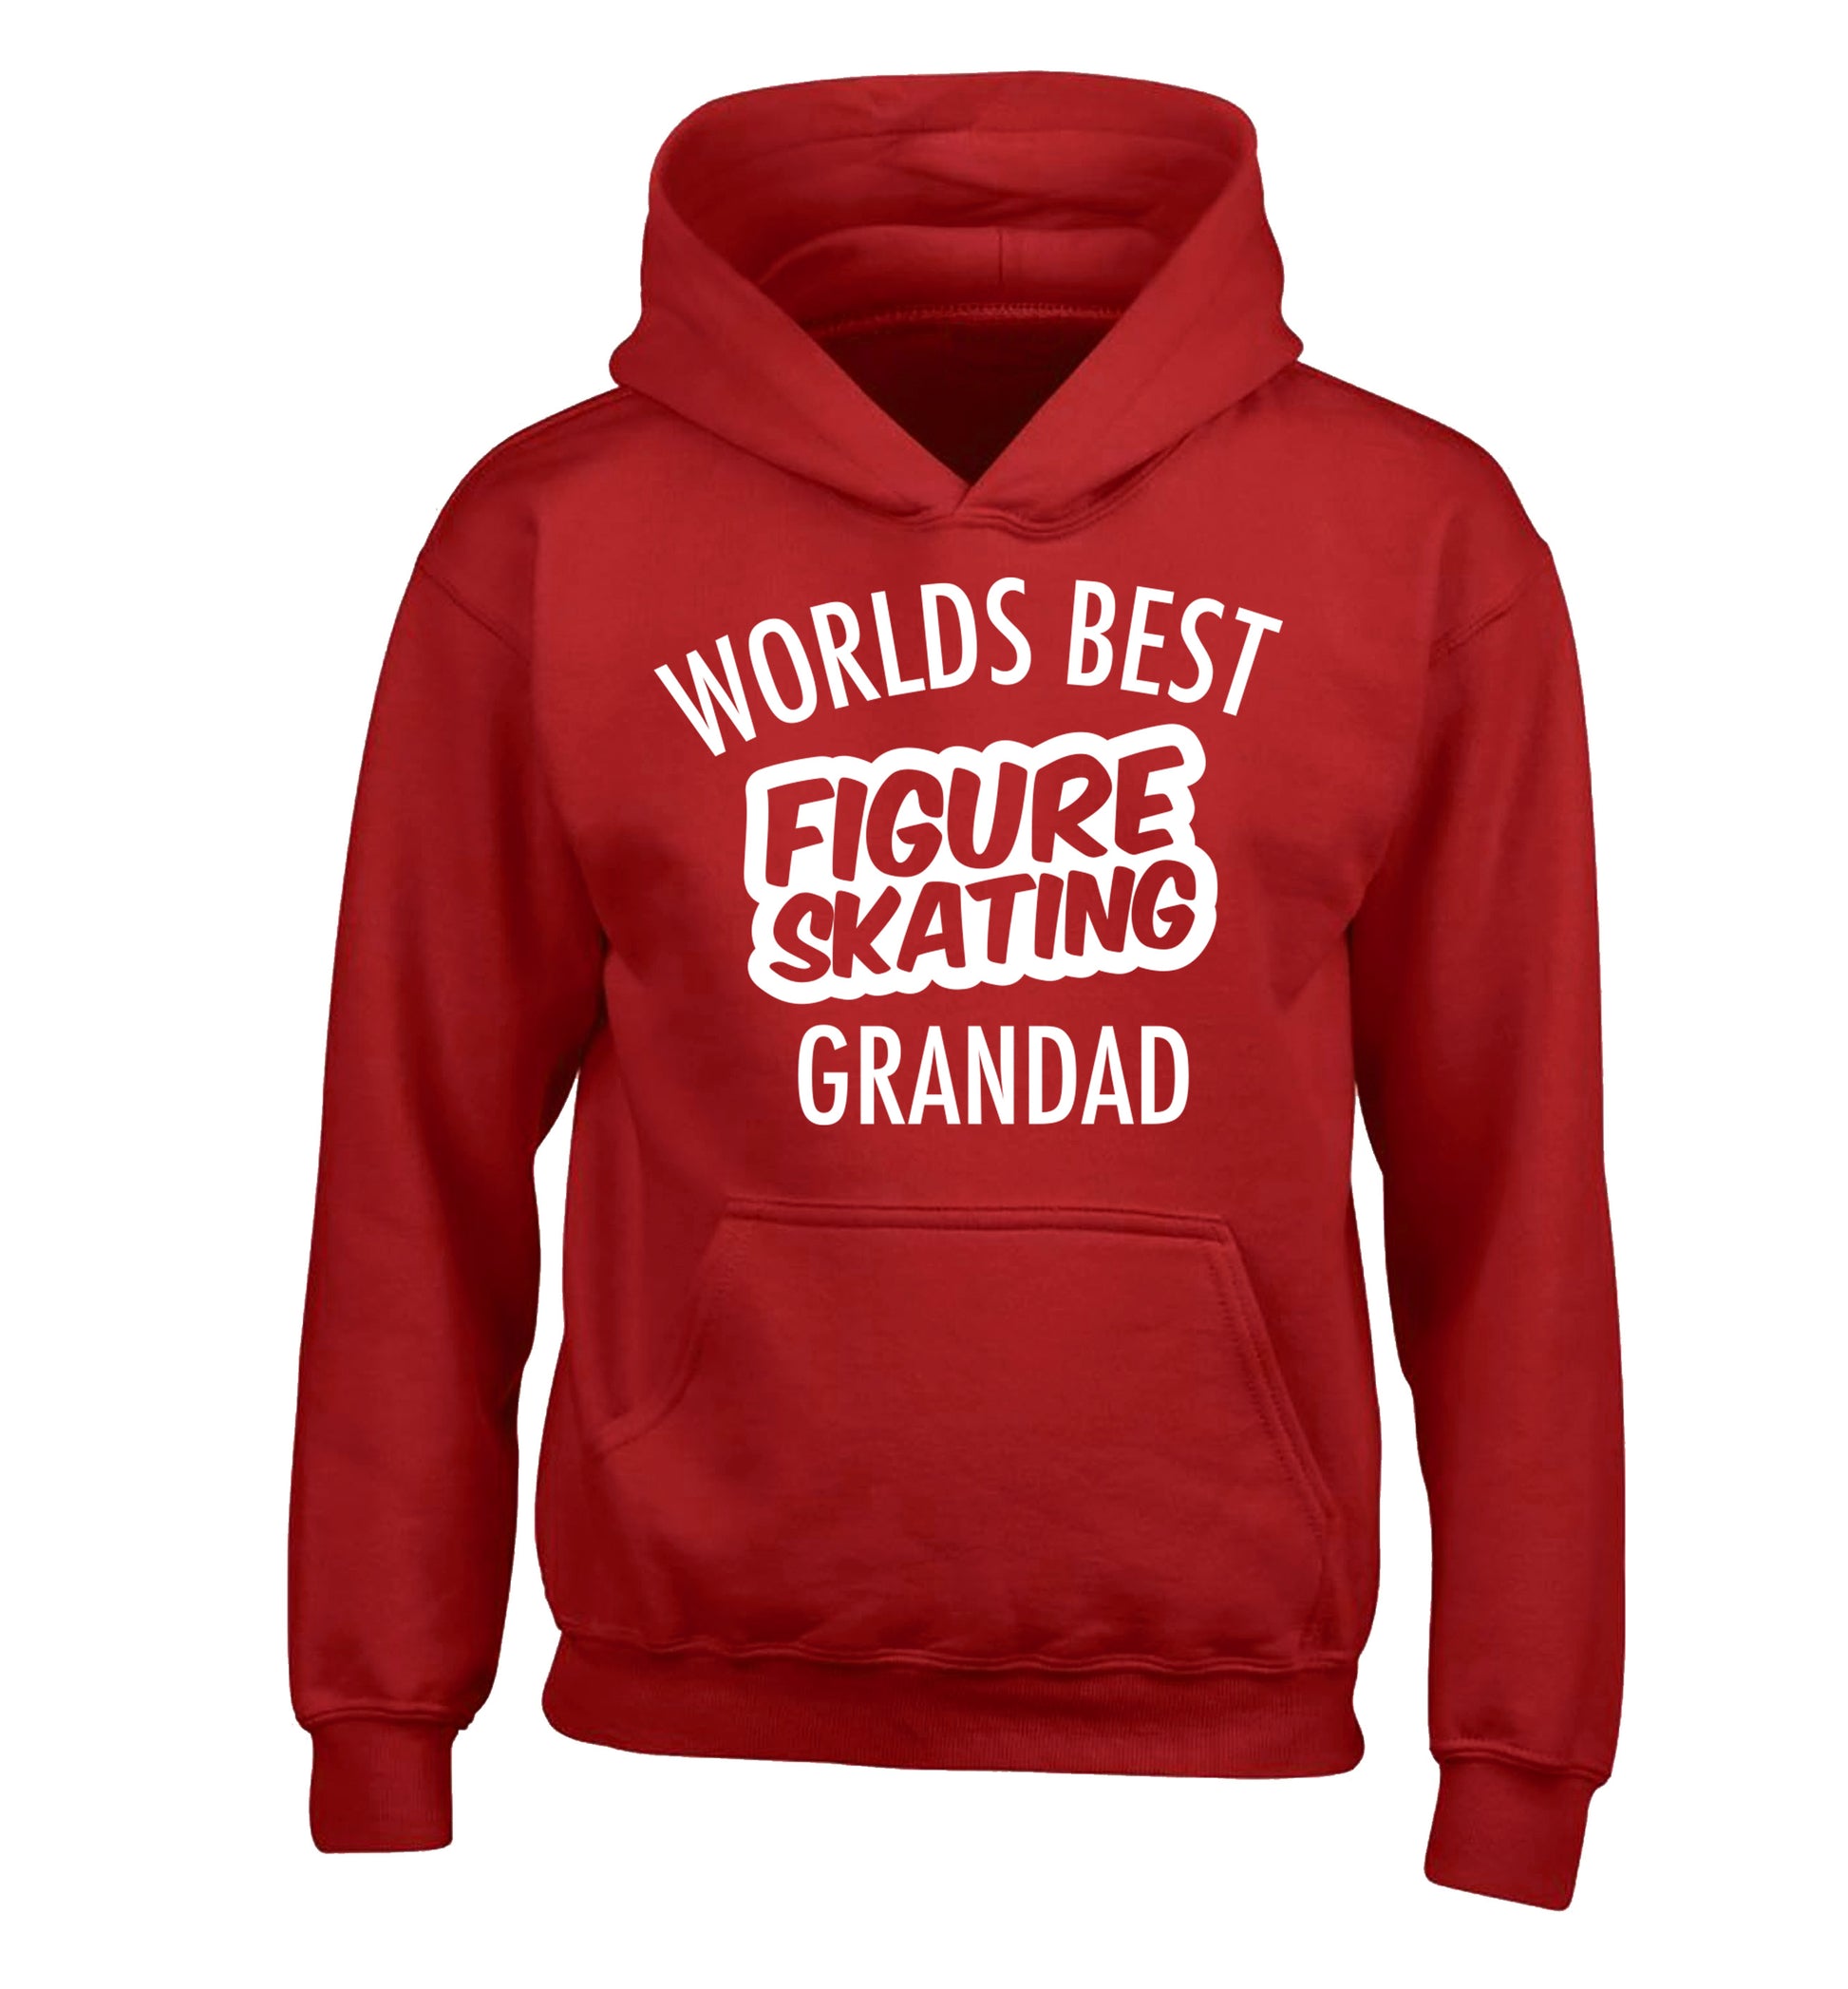 Worlds best figure skating grandad children's red hoodie 12-14 Years